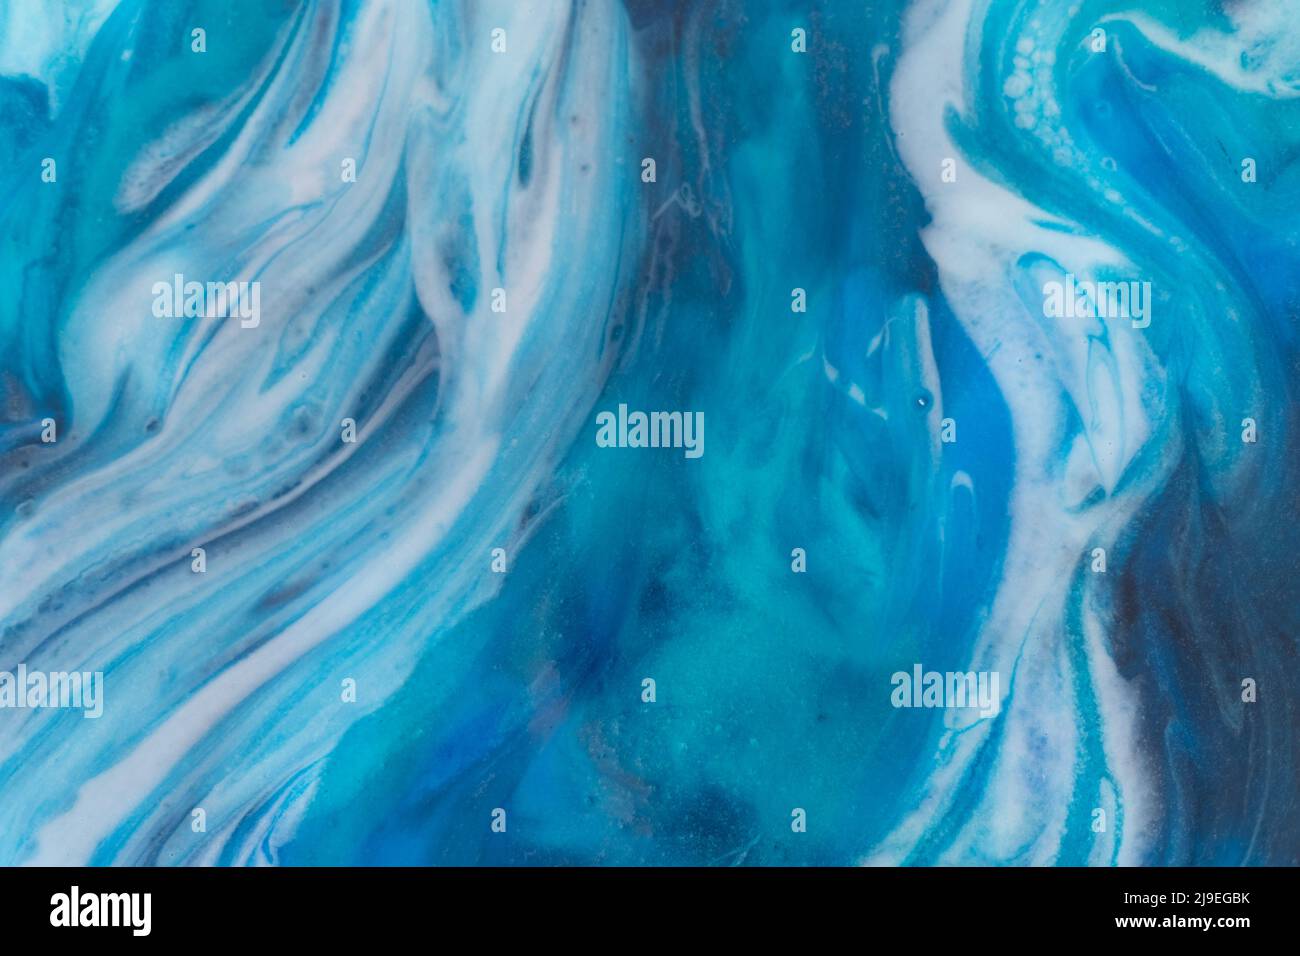 Epoxy resin art. Texture of blue and white paint. Fluid art, kintsugi ...